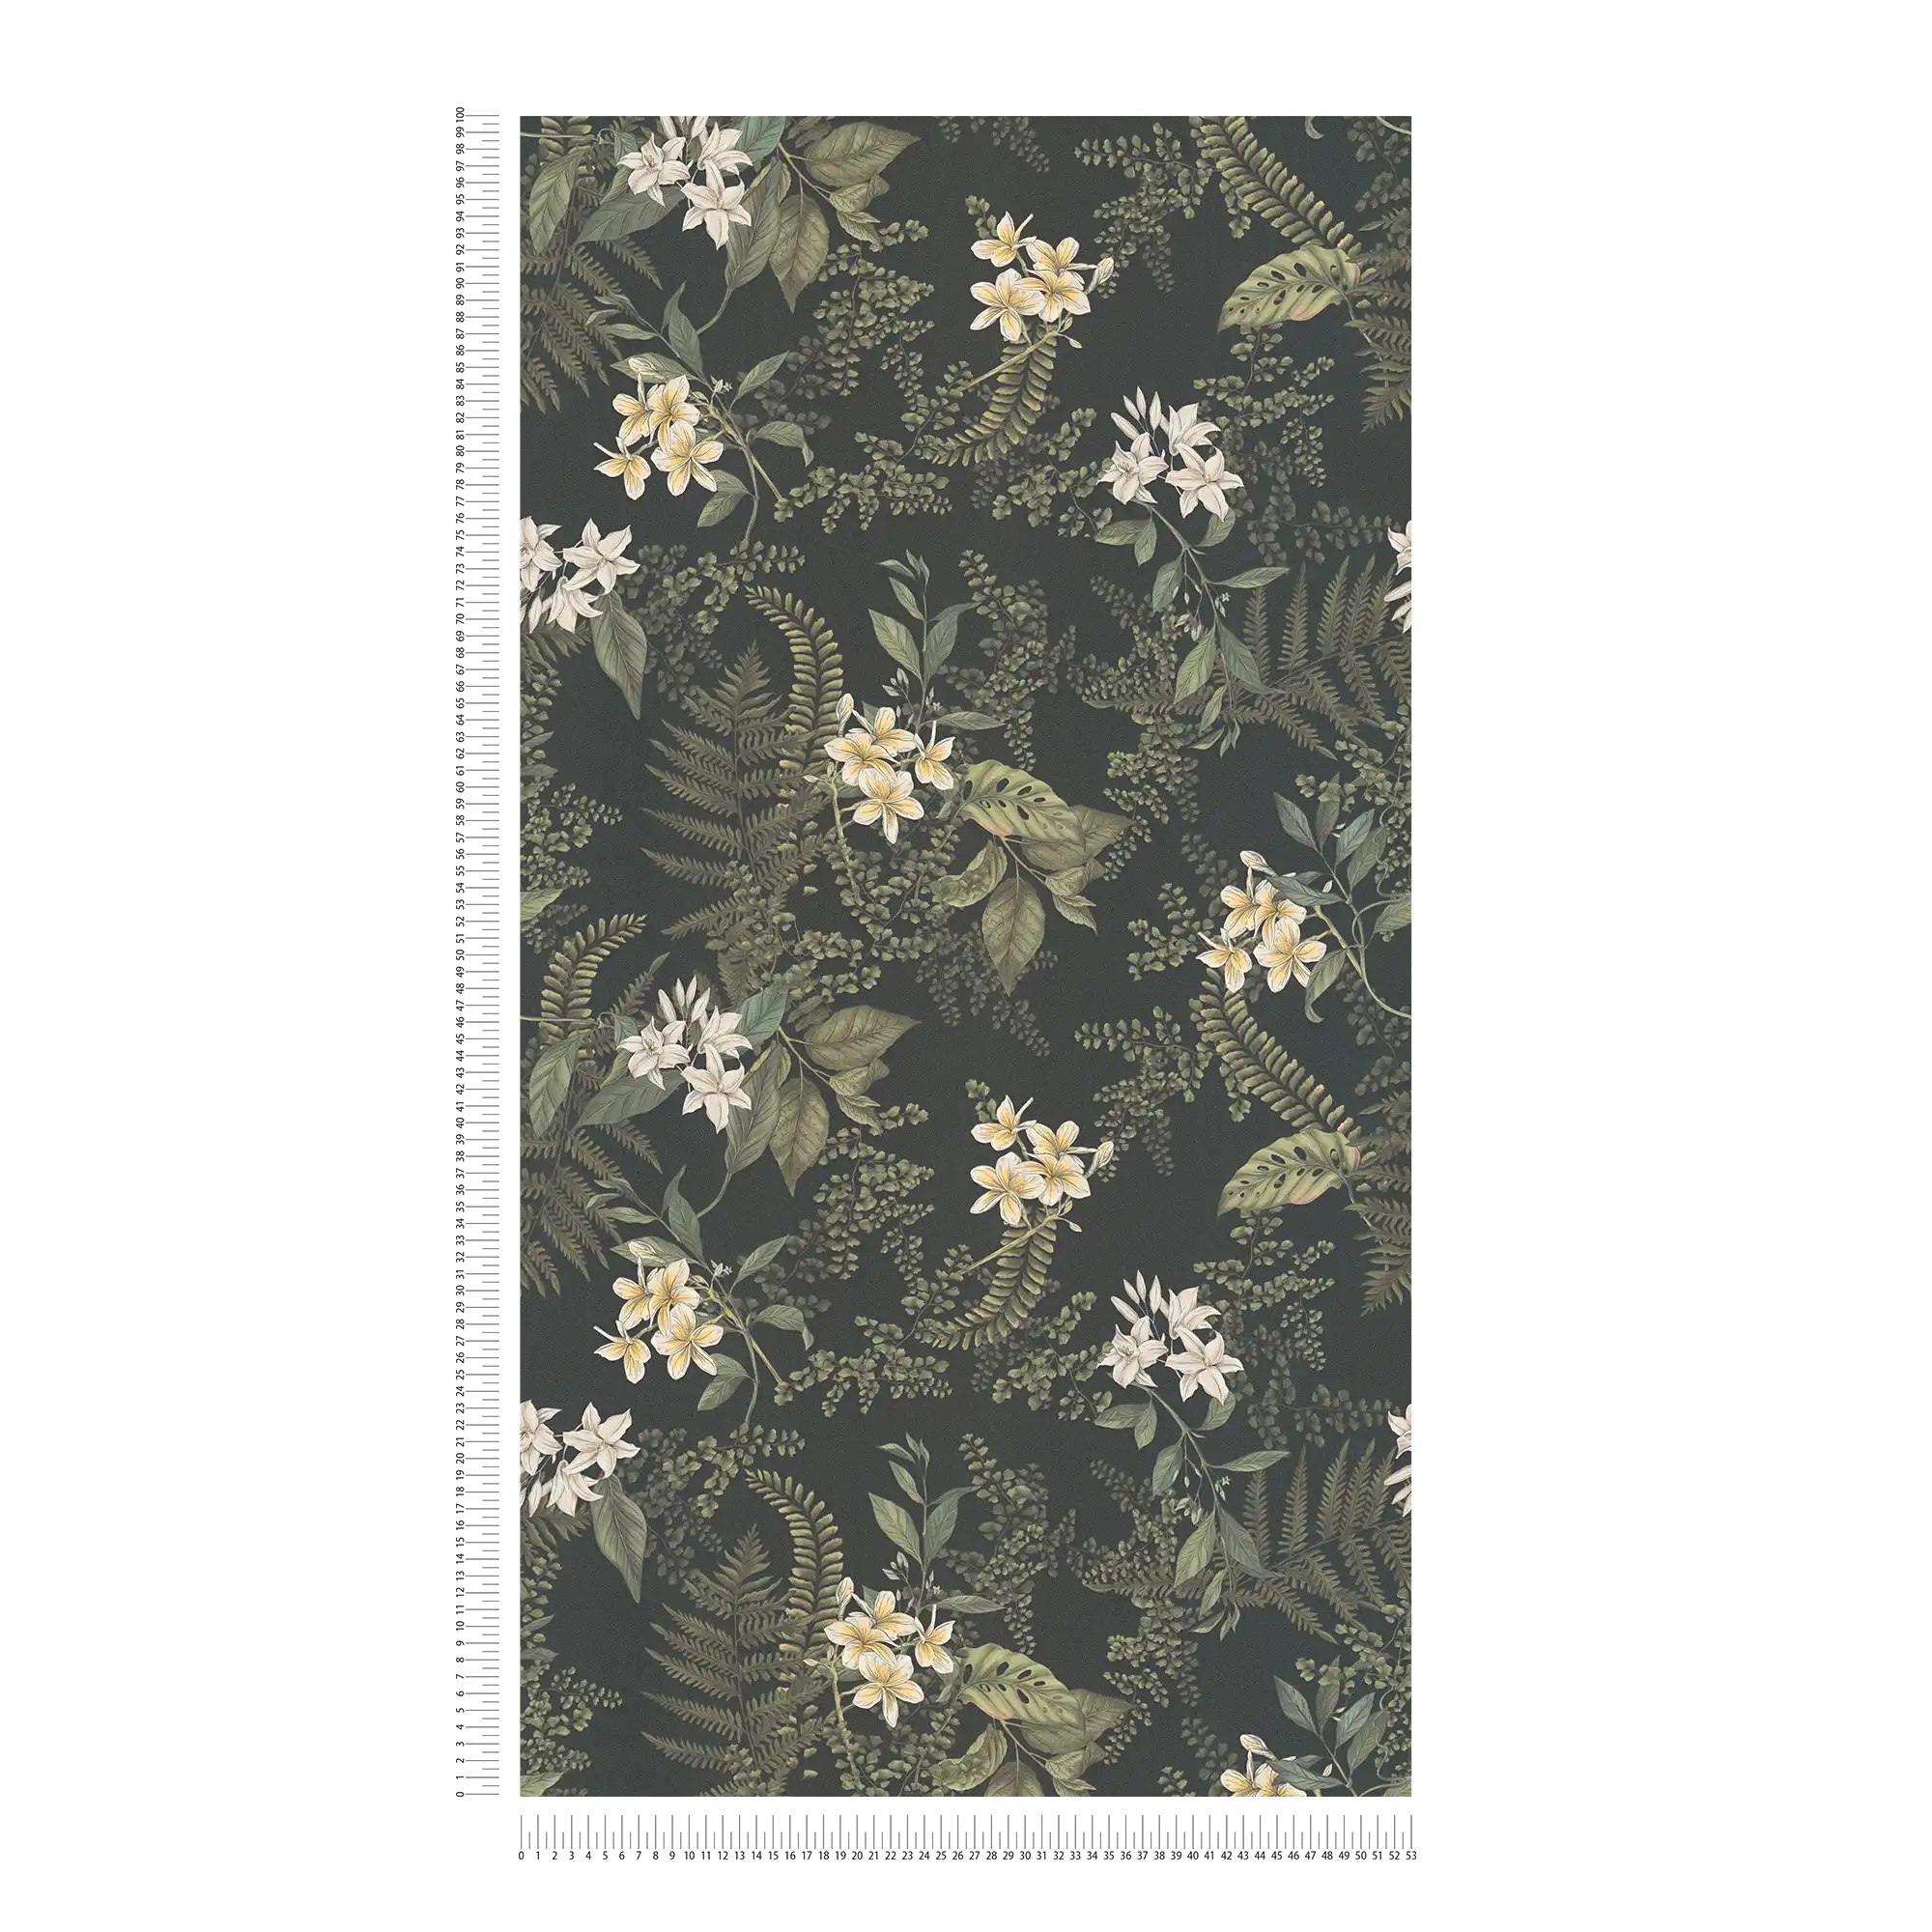             Papel pintado moderno floral con flores y hierbas textura mate - negro, verde oscuro, blanco
        